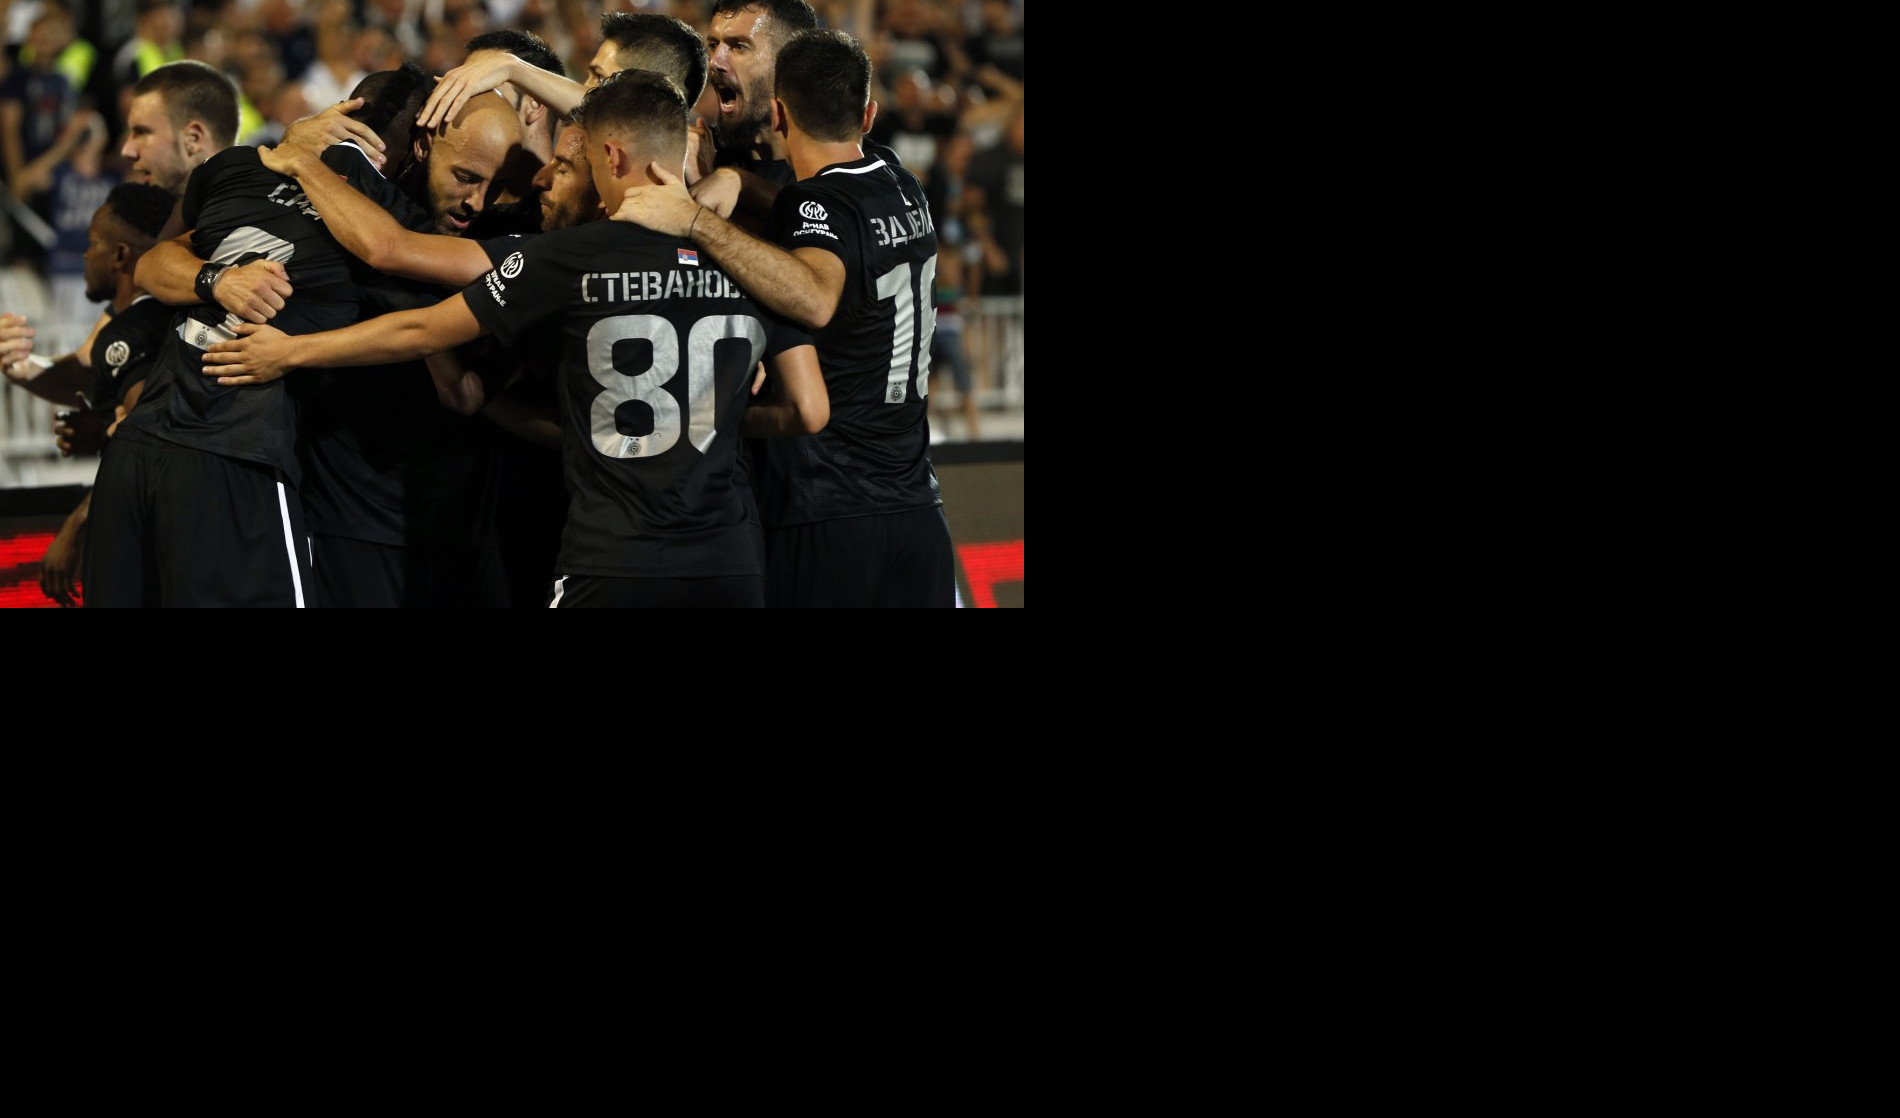 UEFA NEMILOSRDNA! Partizan dva meča bez publike na evropskim utakmicama!